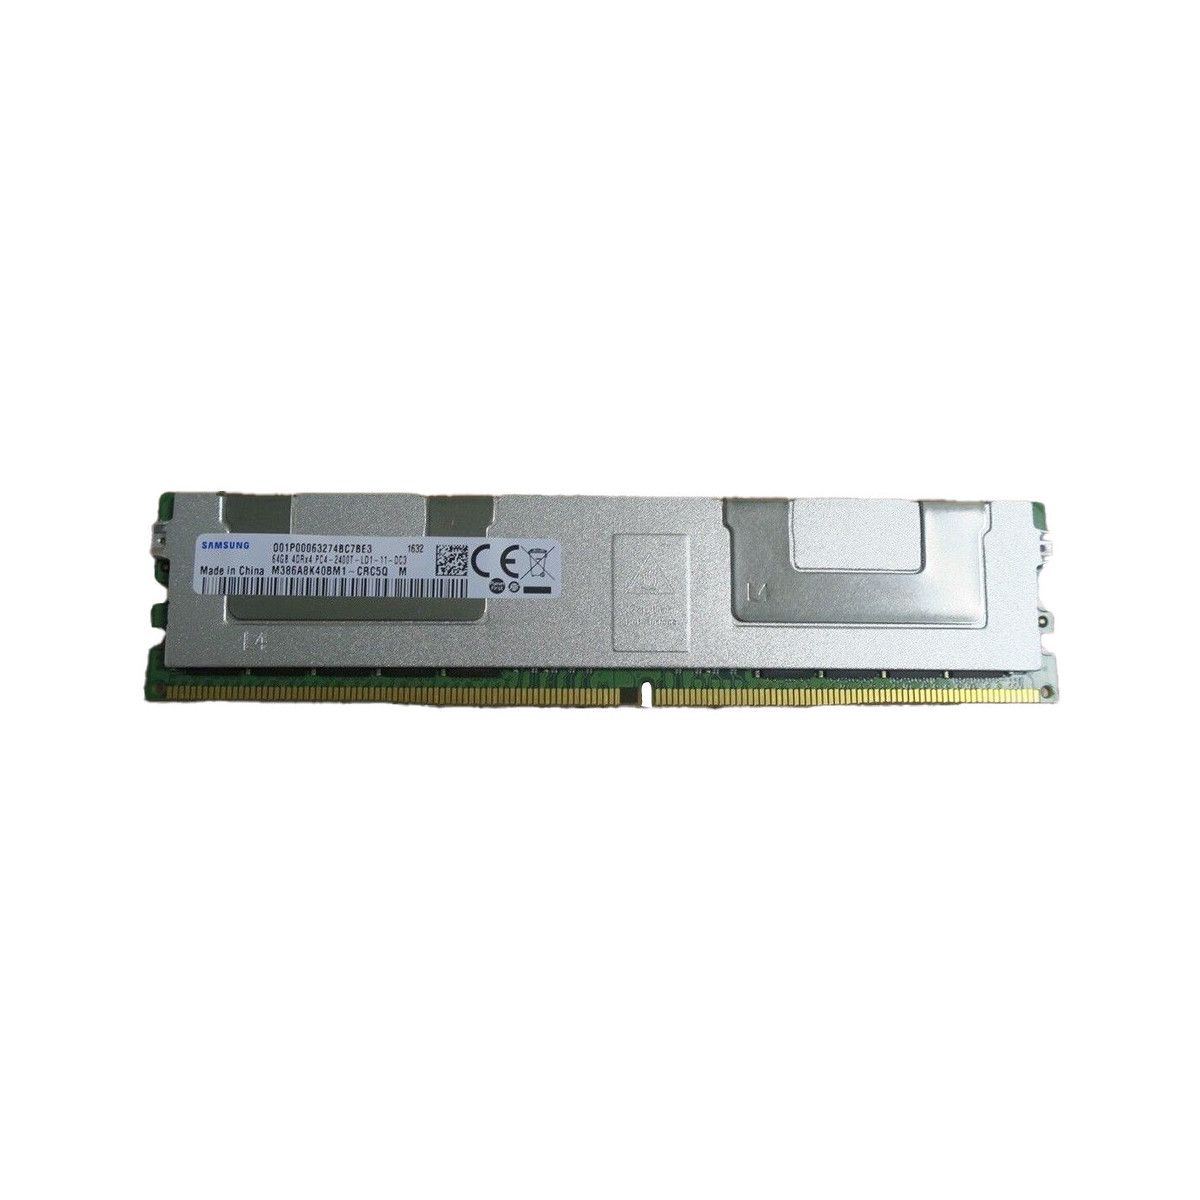 859992-B21-MS - Memstar 1x 64GB DDR4-2400 LRDIMM PC4-19200T-R